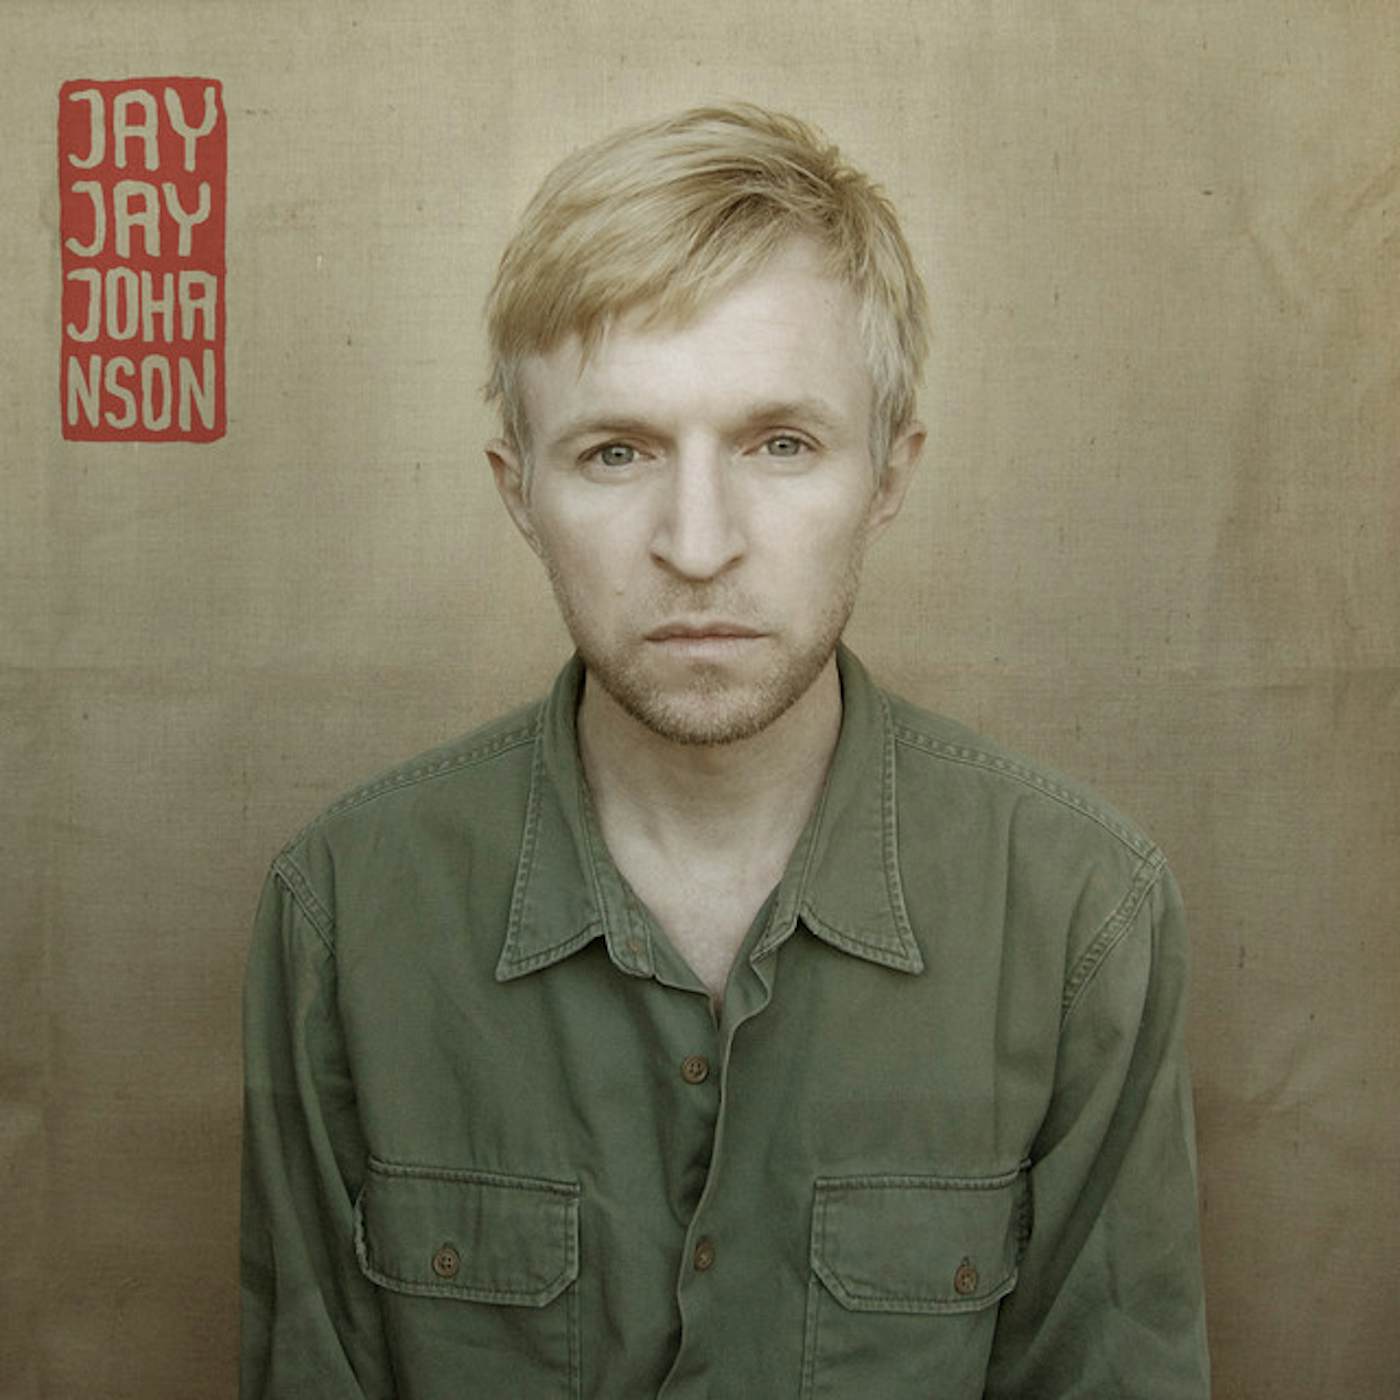 Jay-Jay Johanson OPIUM CD